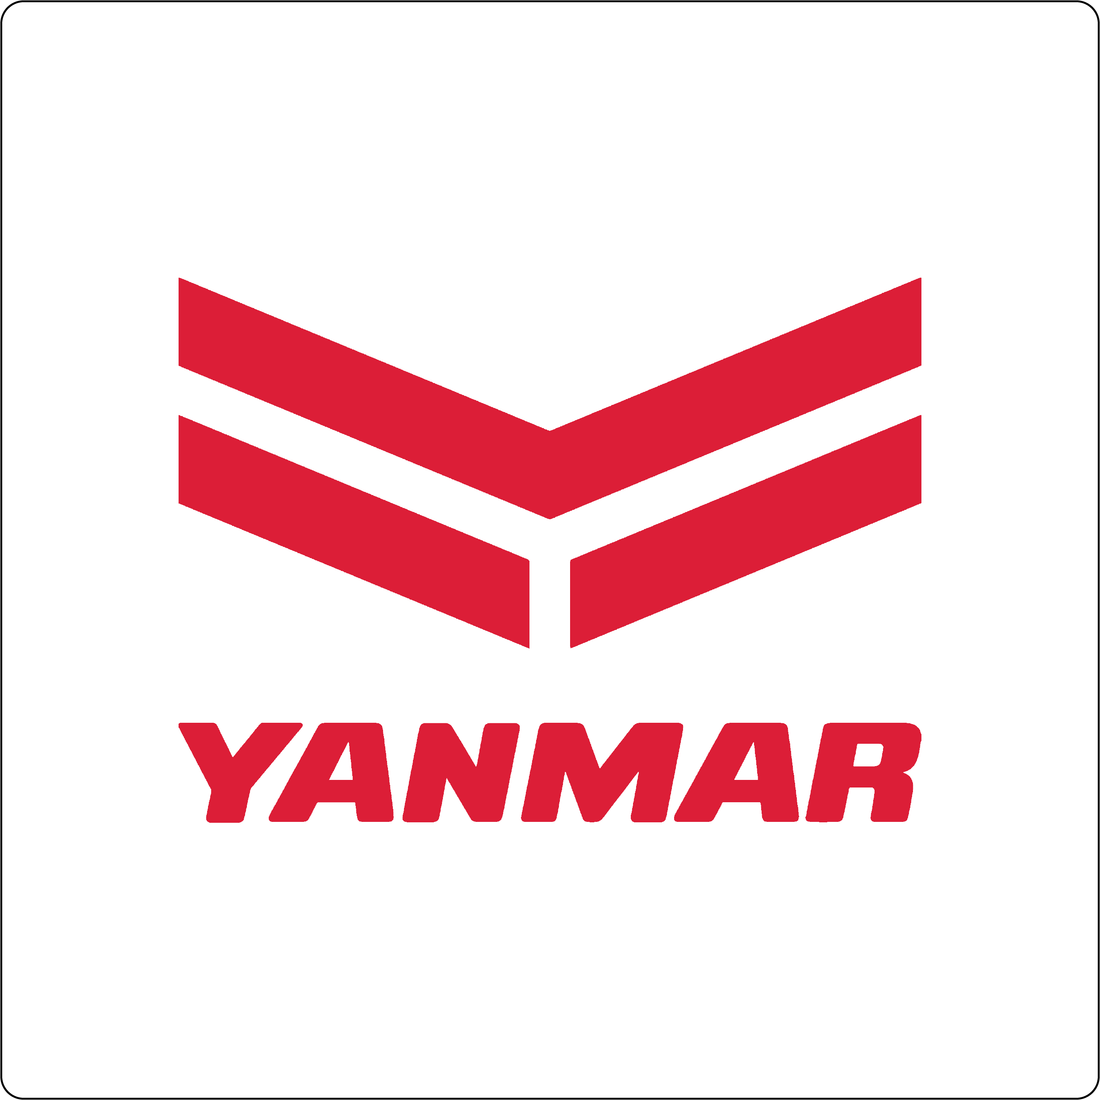  Yanmar®